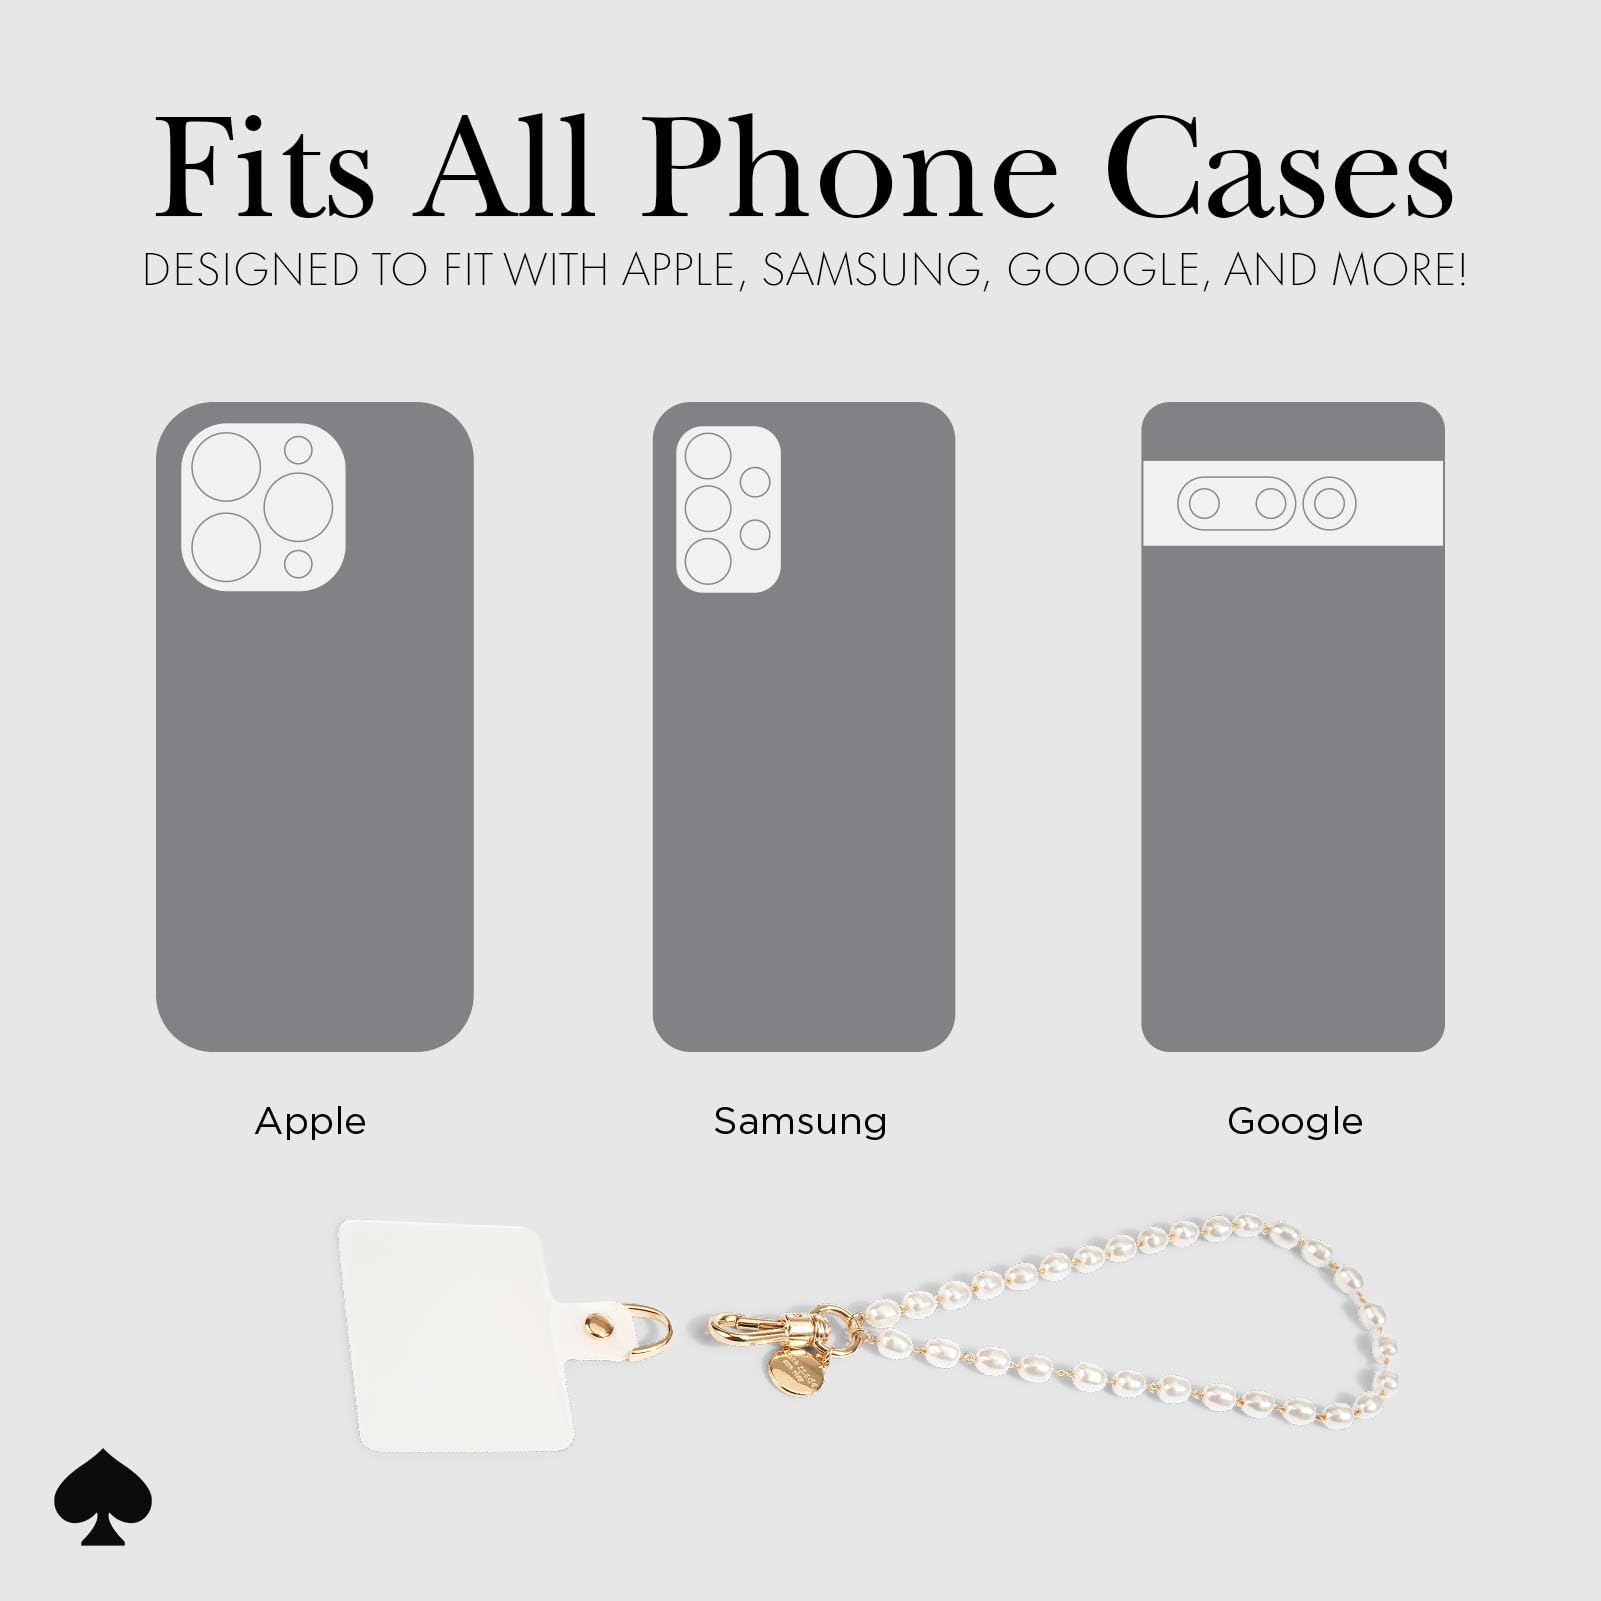 Kate Spade New York Phone Charm - Detachable Cell Phone Lanyard - Sea Pearl